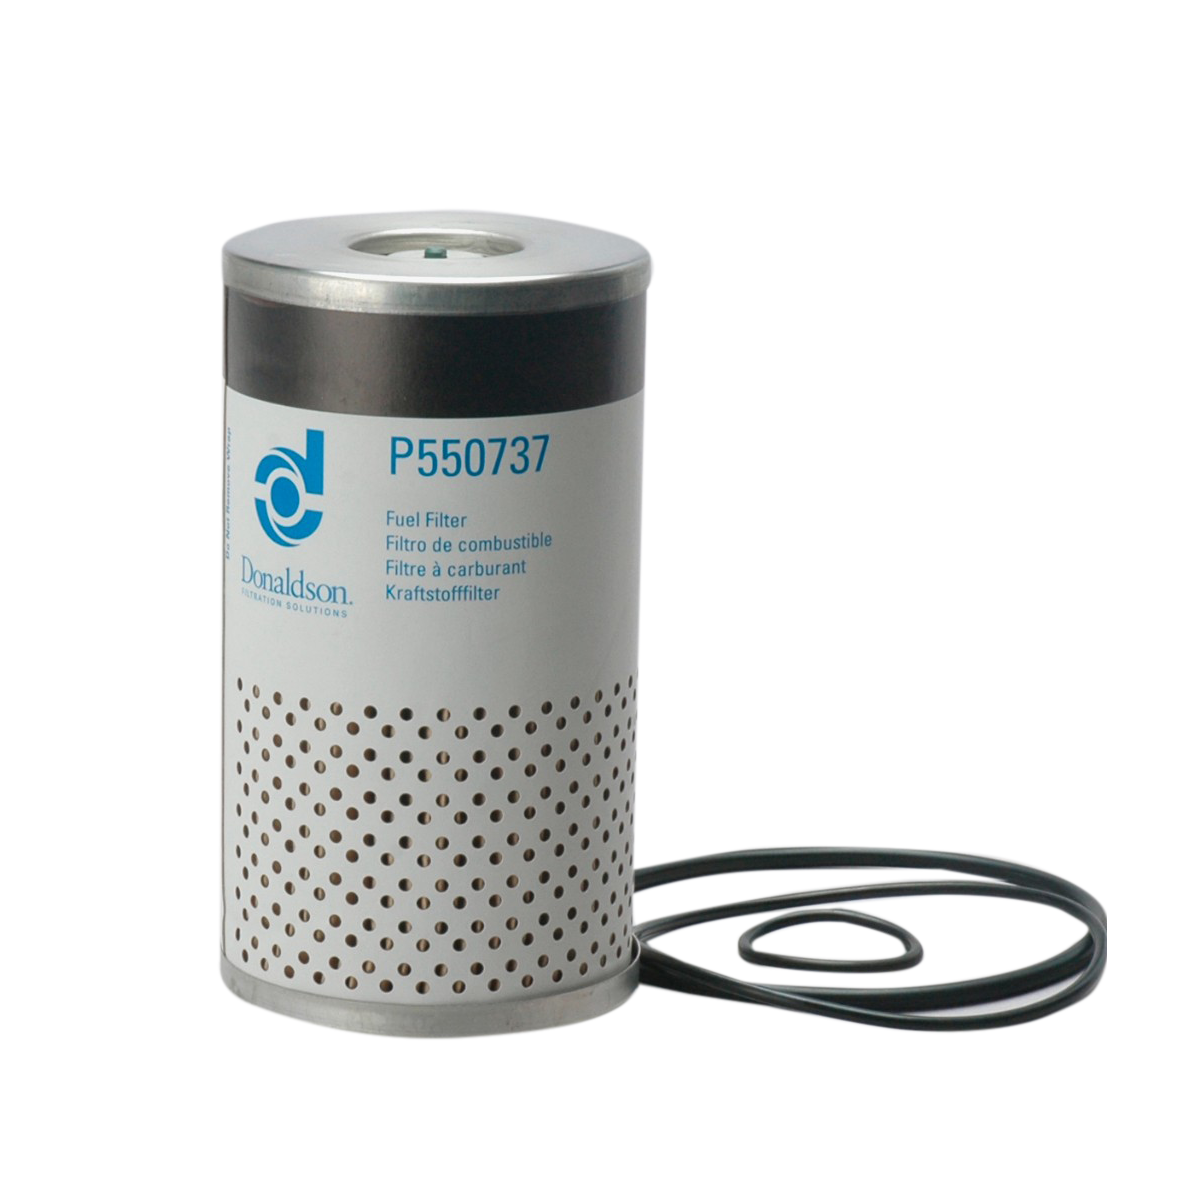 Fuel Filter Water Separator P550737 cartridge